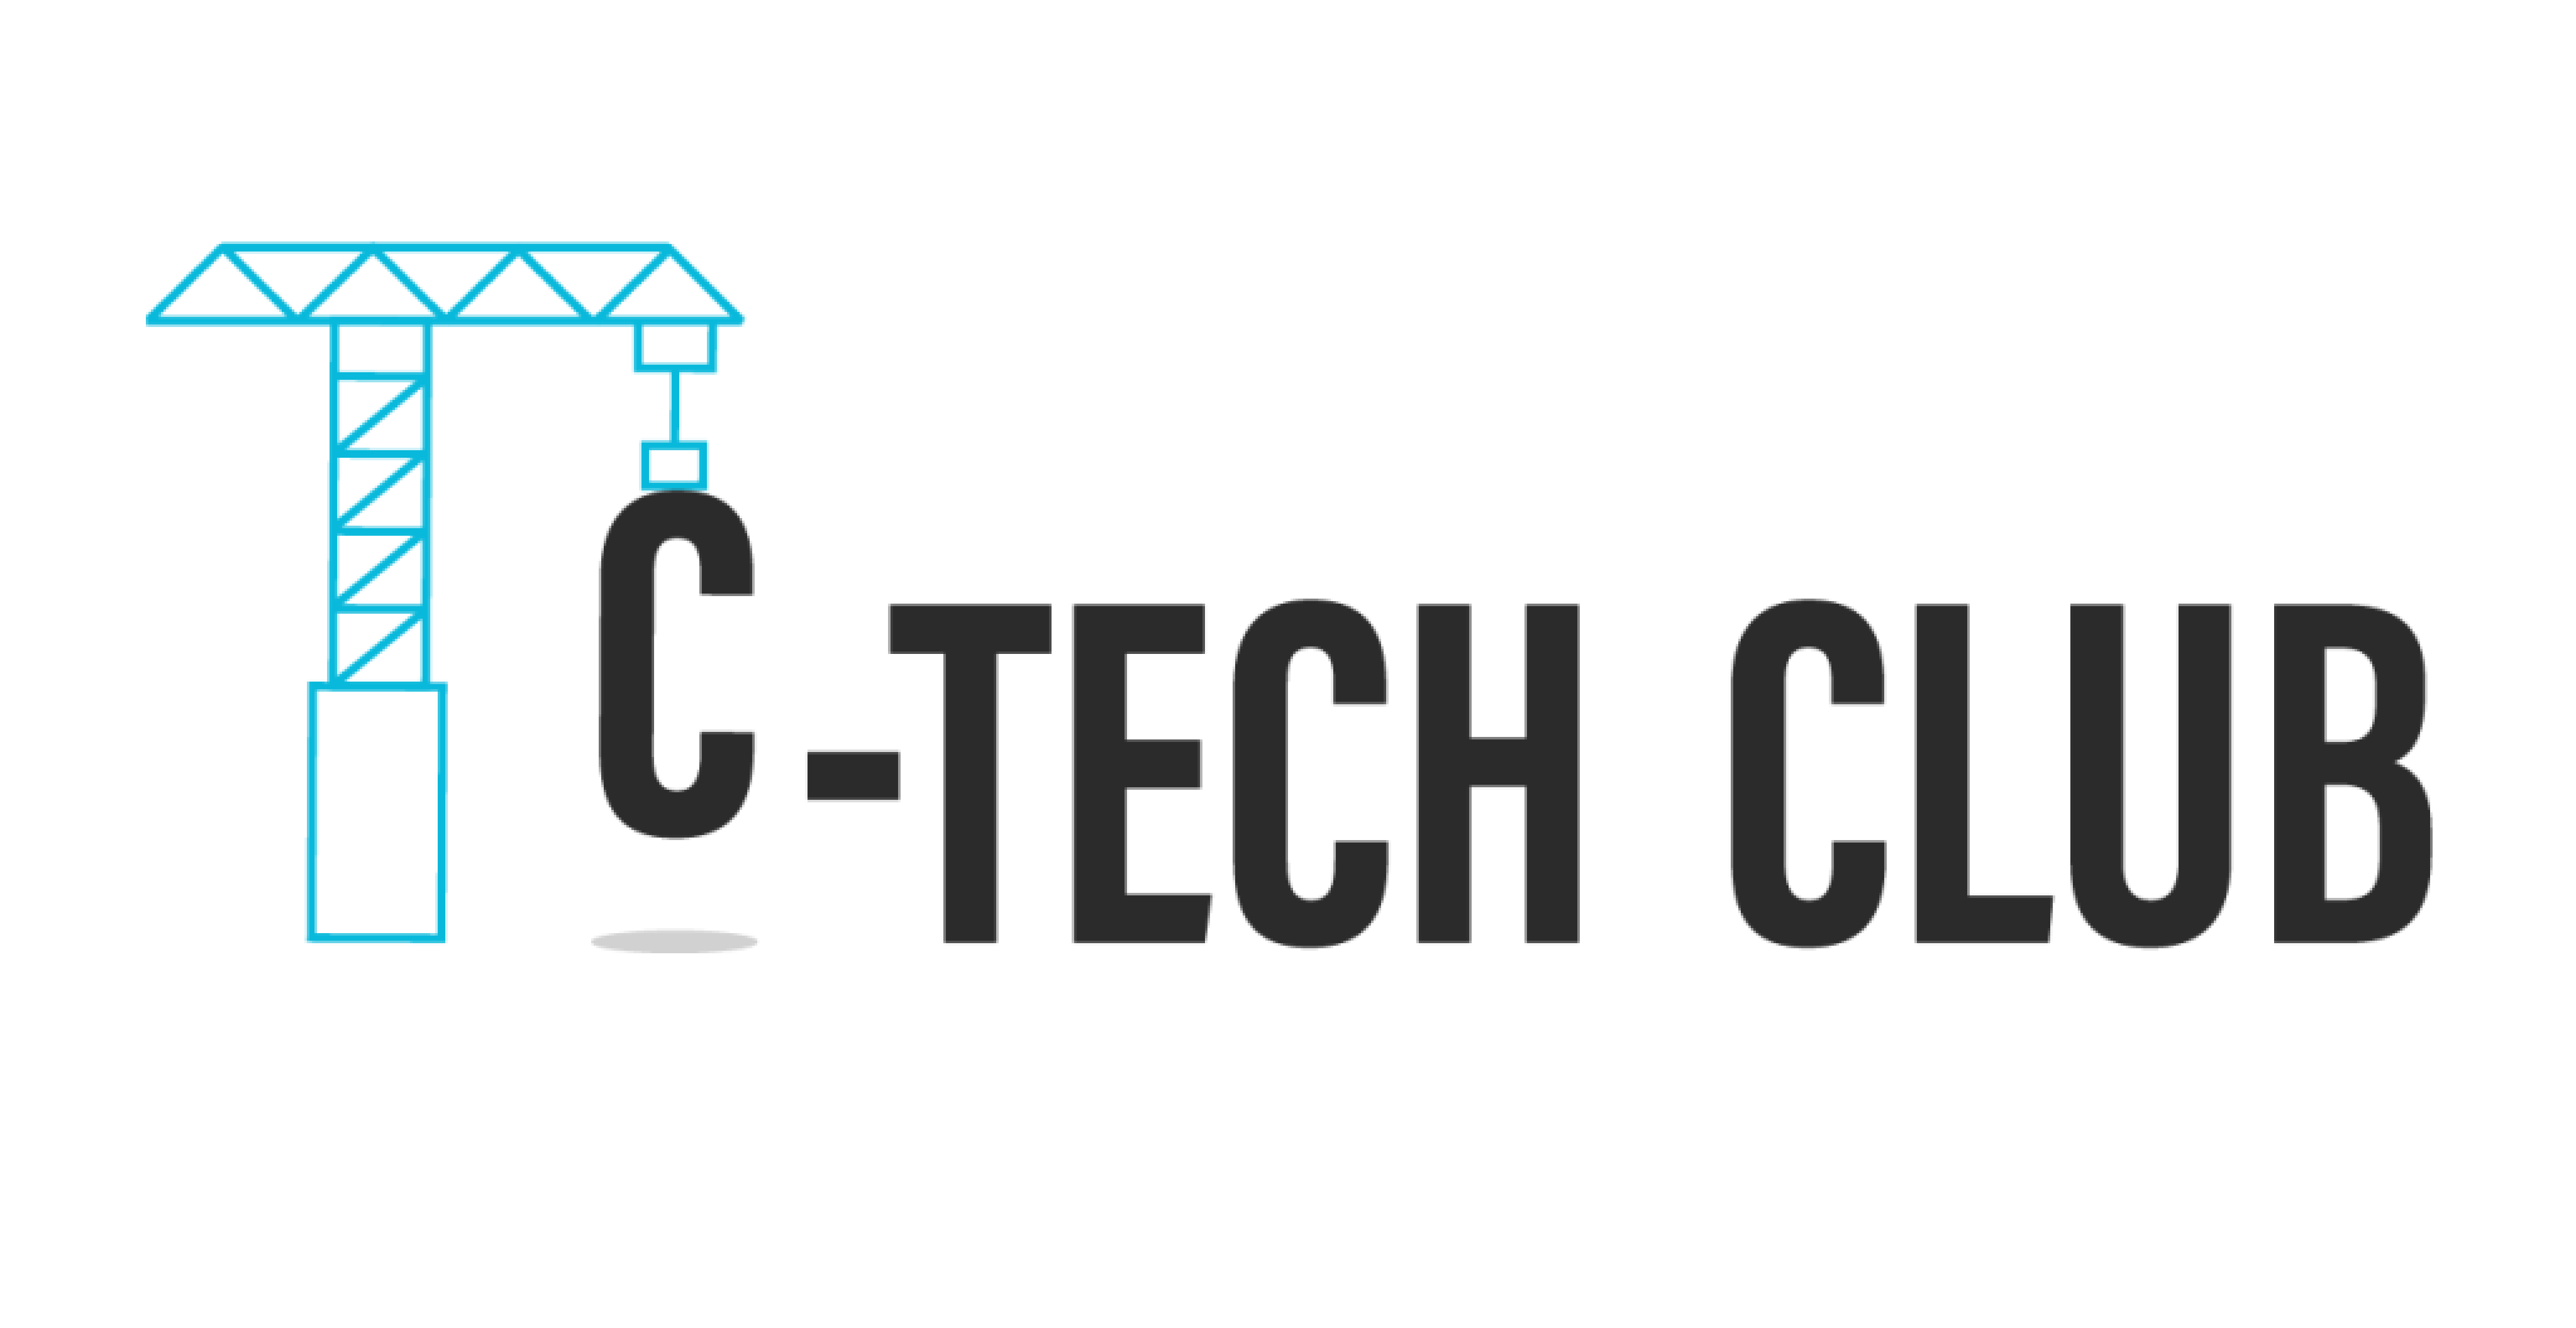 C tech club logo